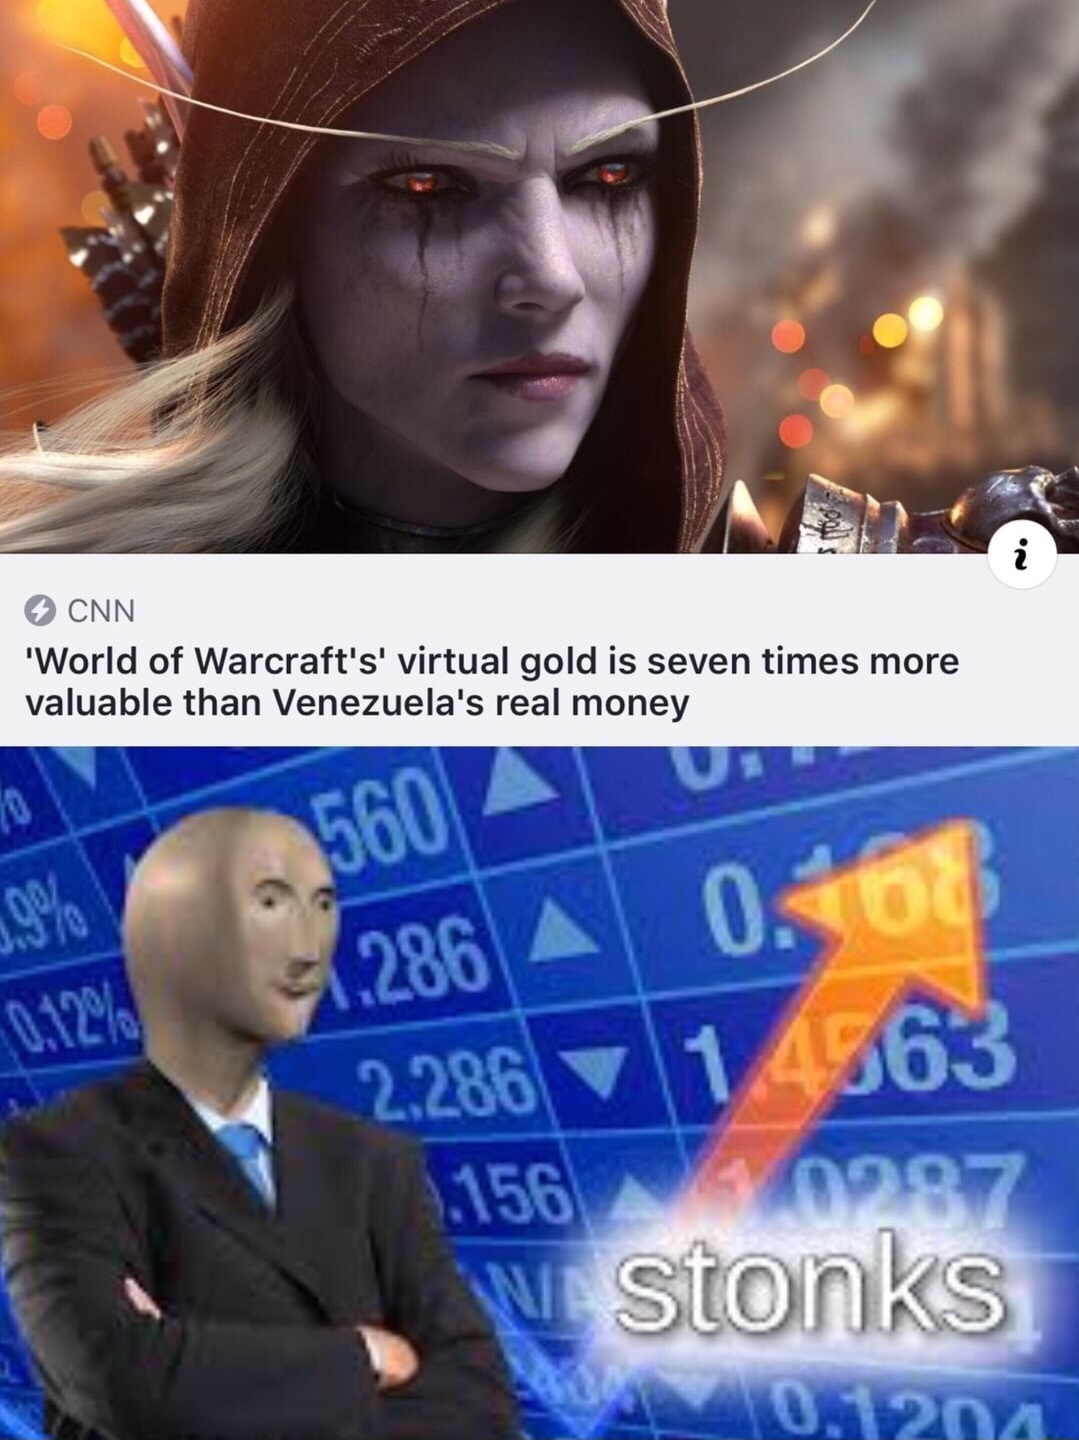 stonks meme - Cnn 'World of Warcraft's' virtual gold is seven times more valuable than Venezuela's real money Eu 1.286 0.168 2.28614363 11562 07 we stonks 0.1204